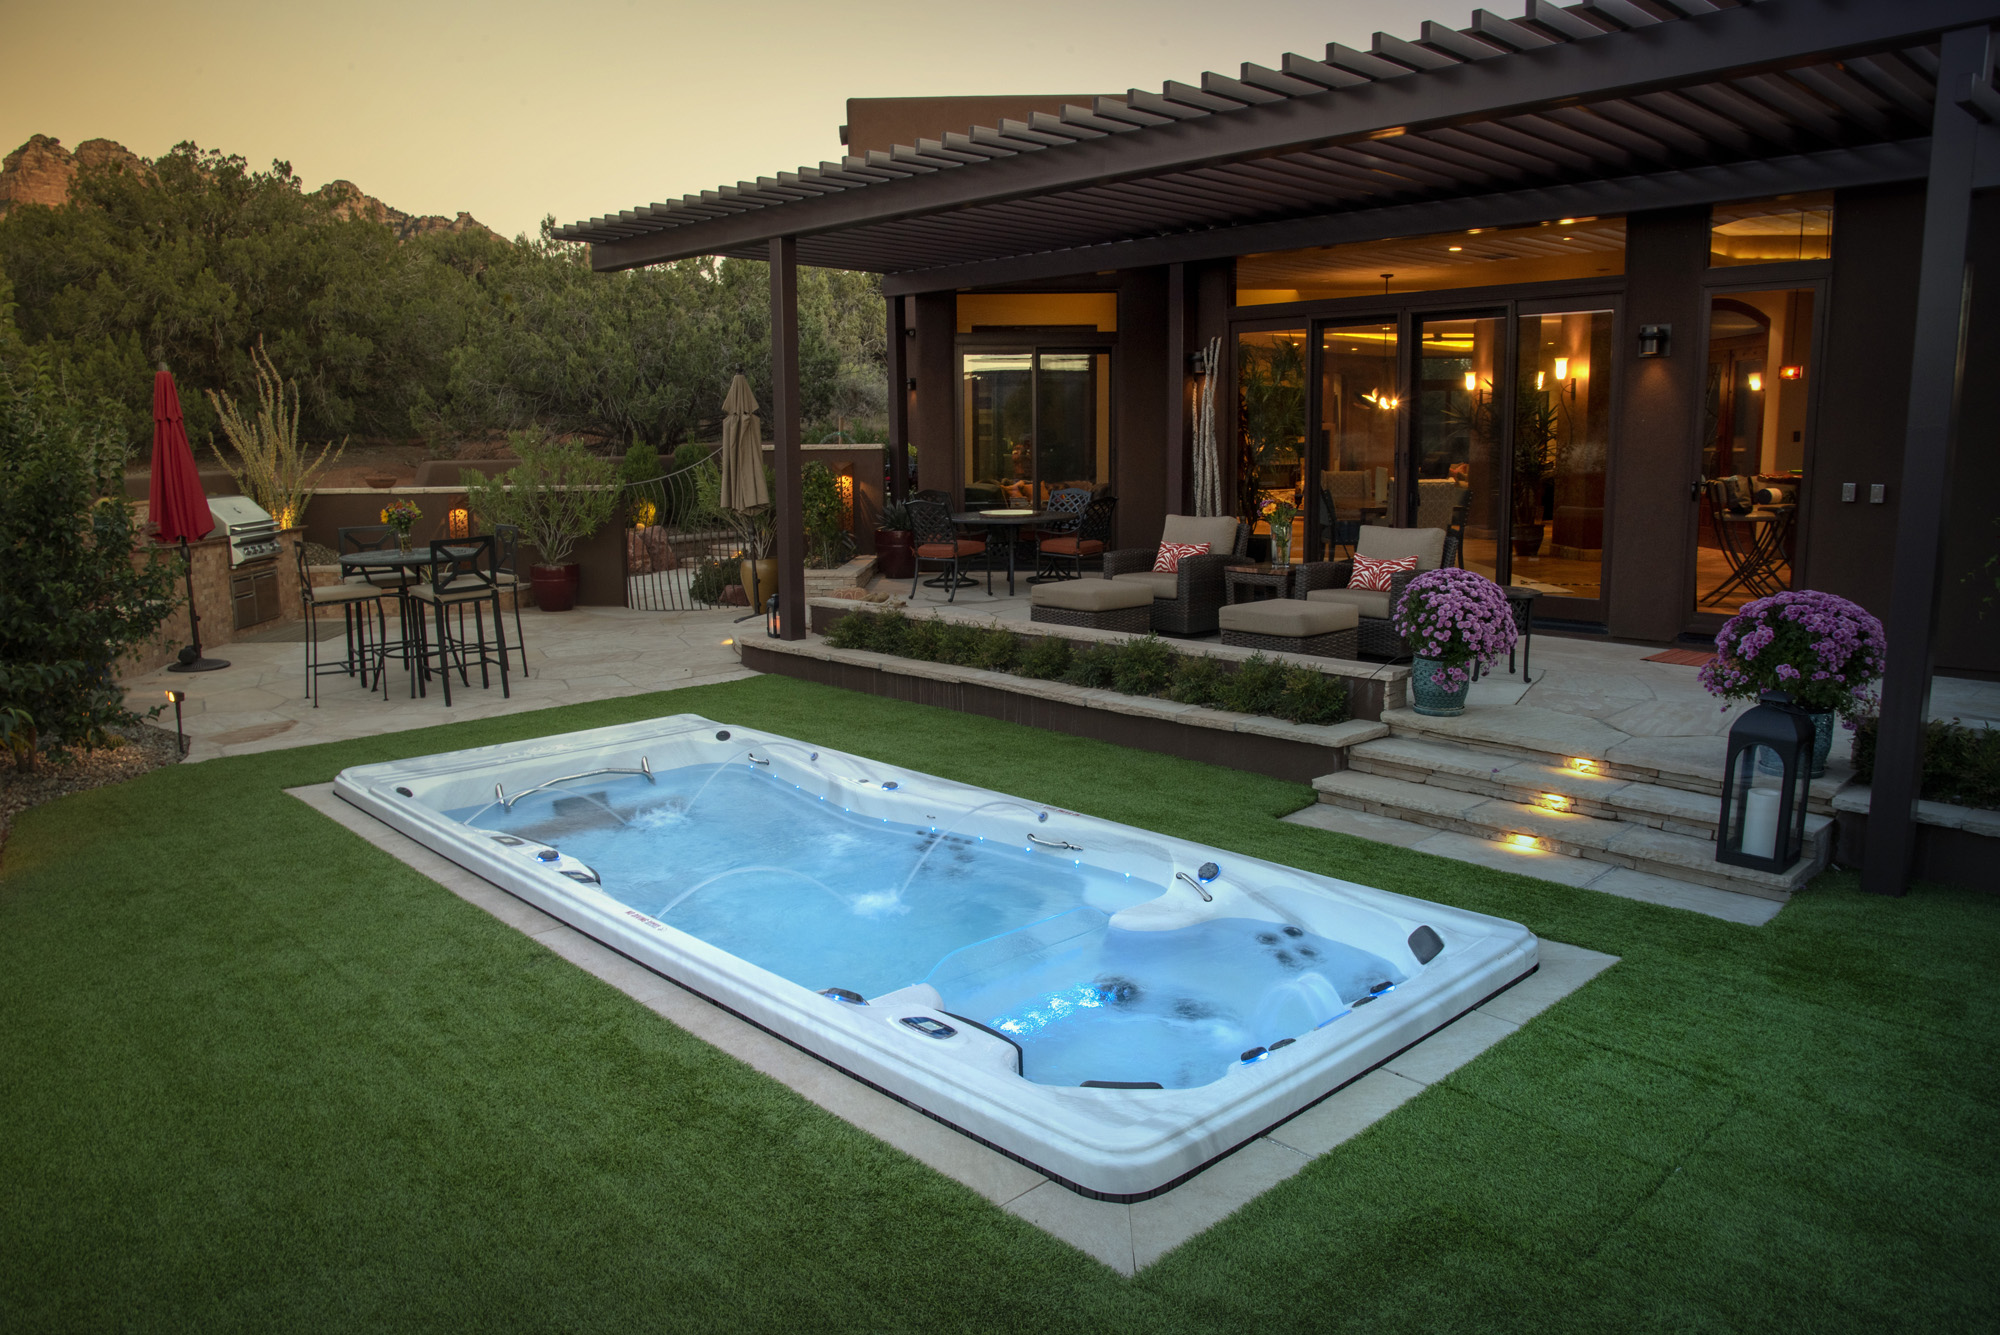 A Swimming Pool Alternative For Any Backyard Michael Phelps Swim Spa Blog